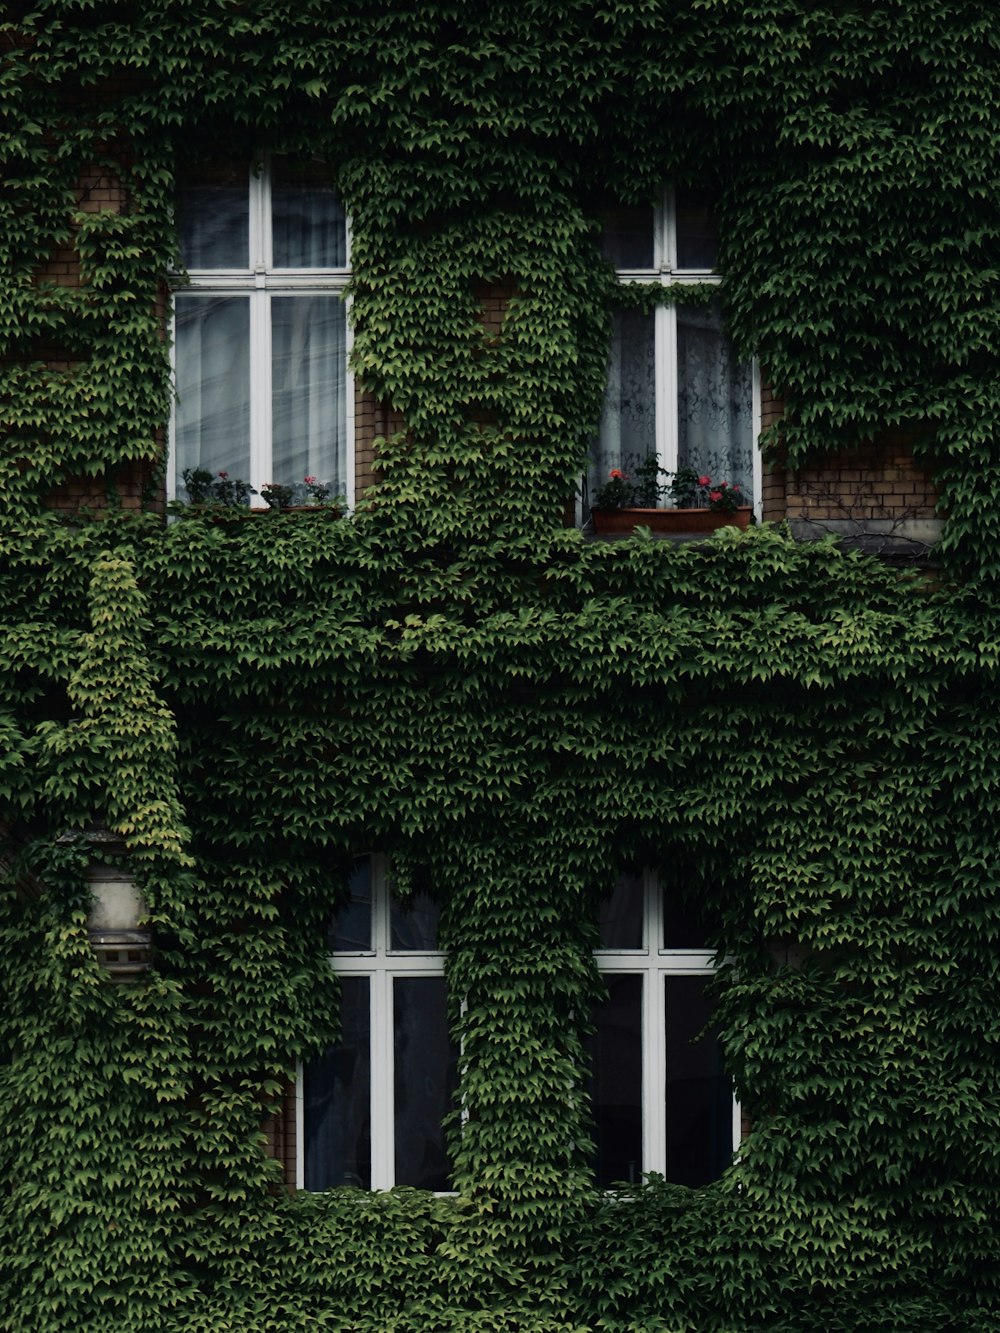 green vines on house wall near windows